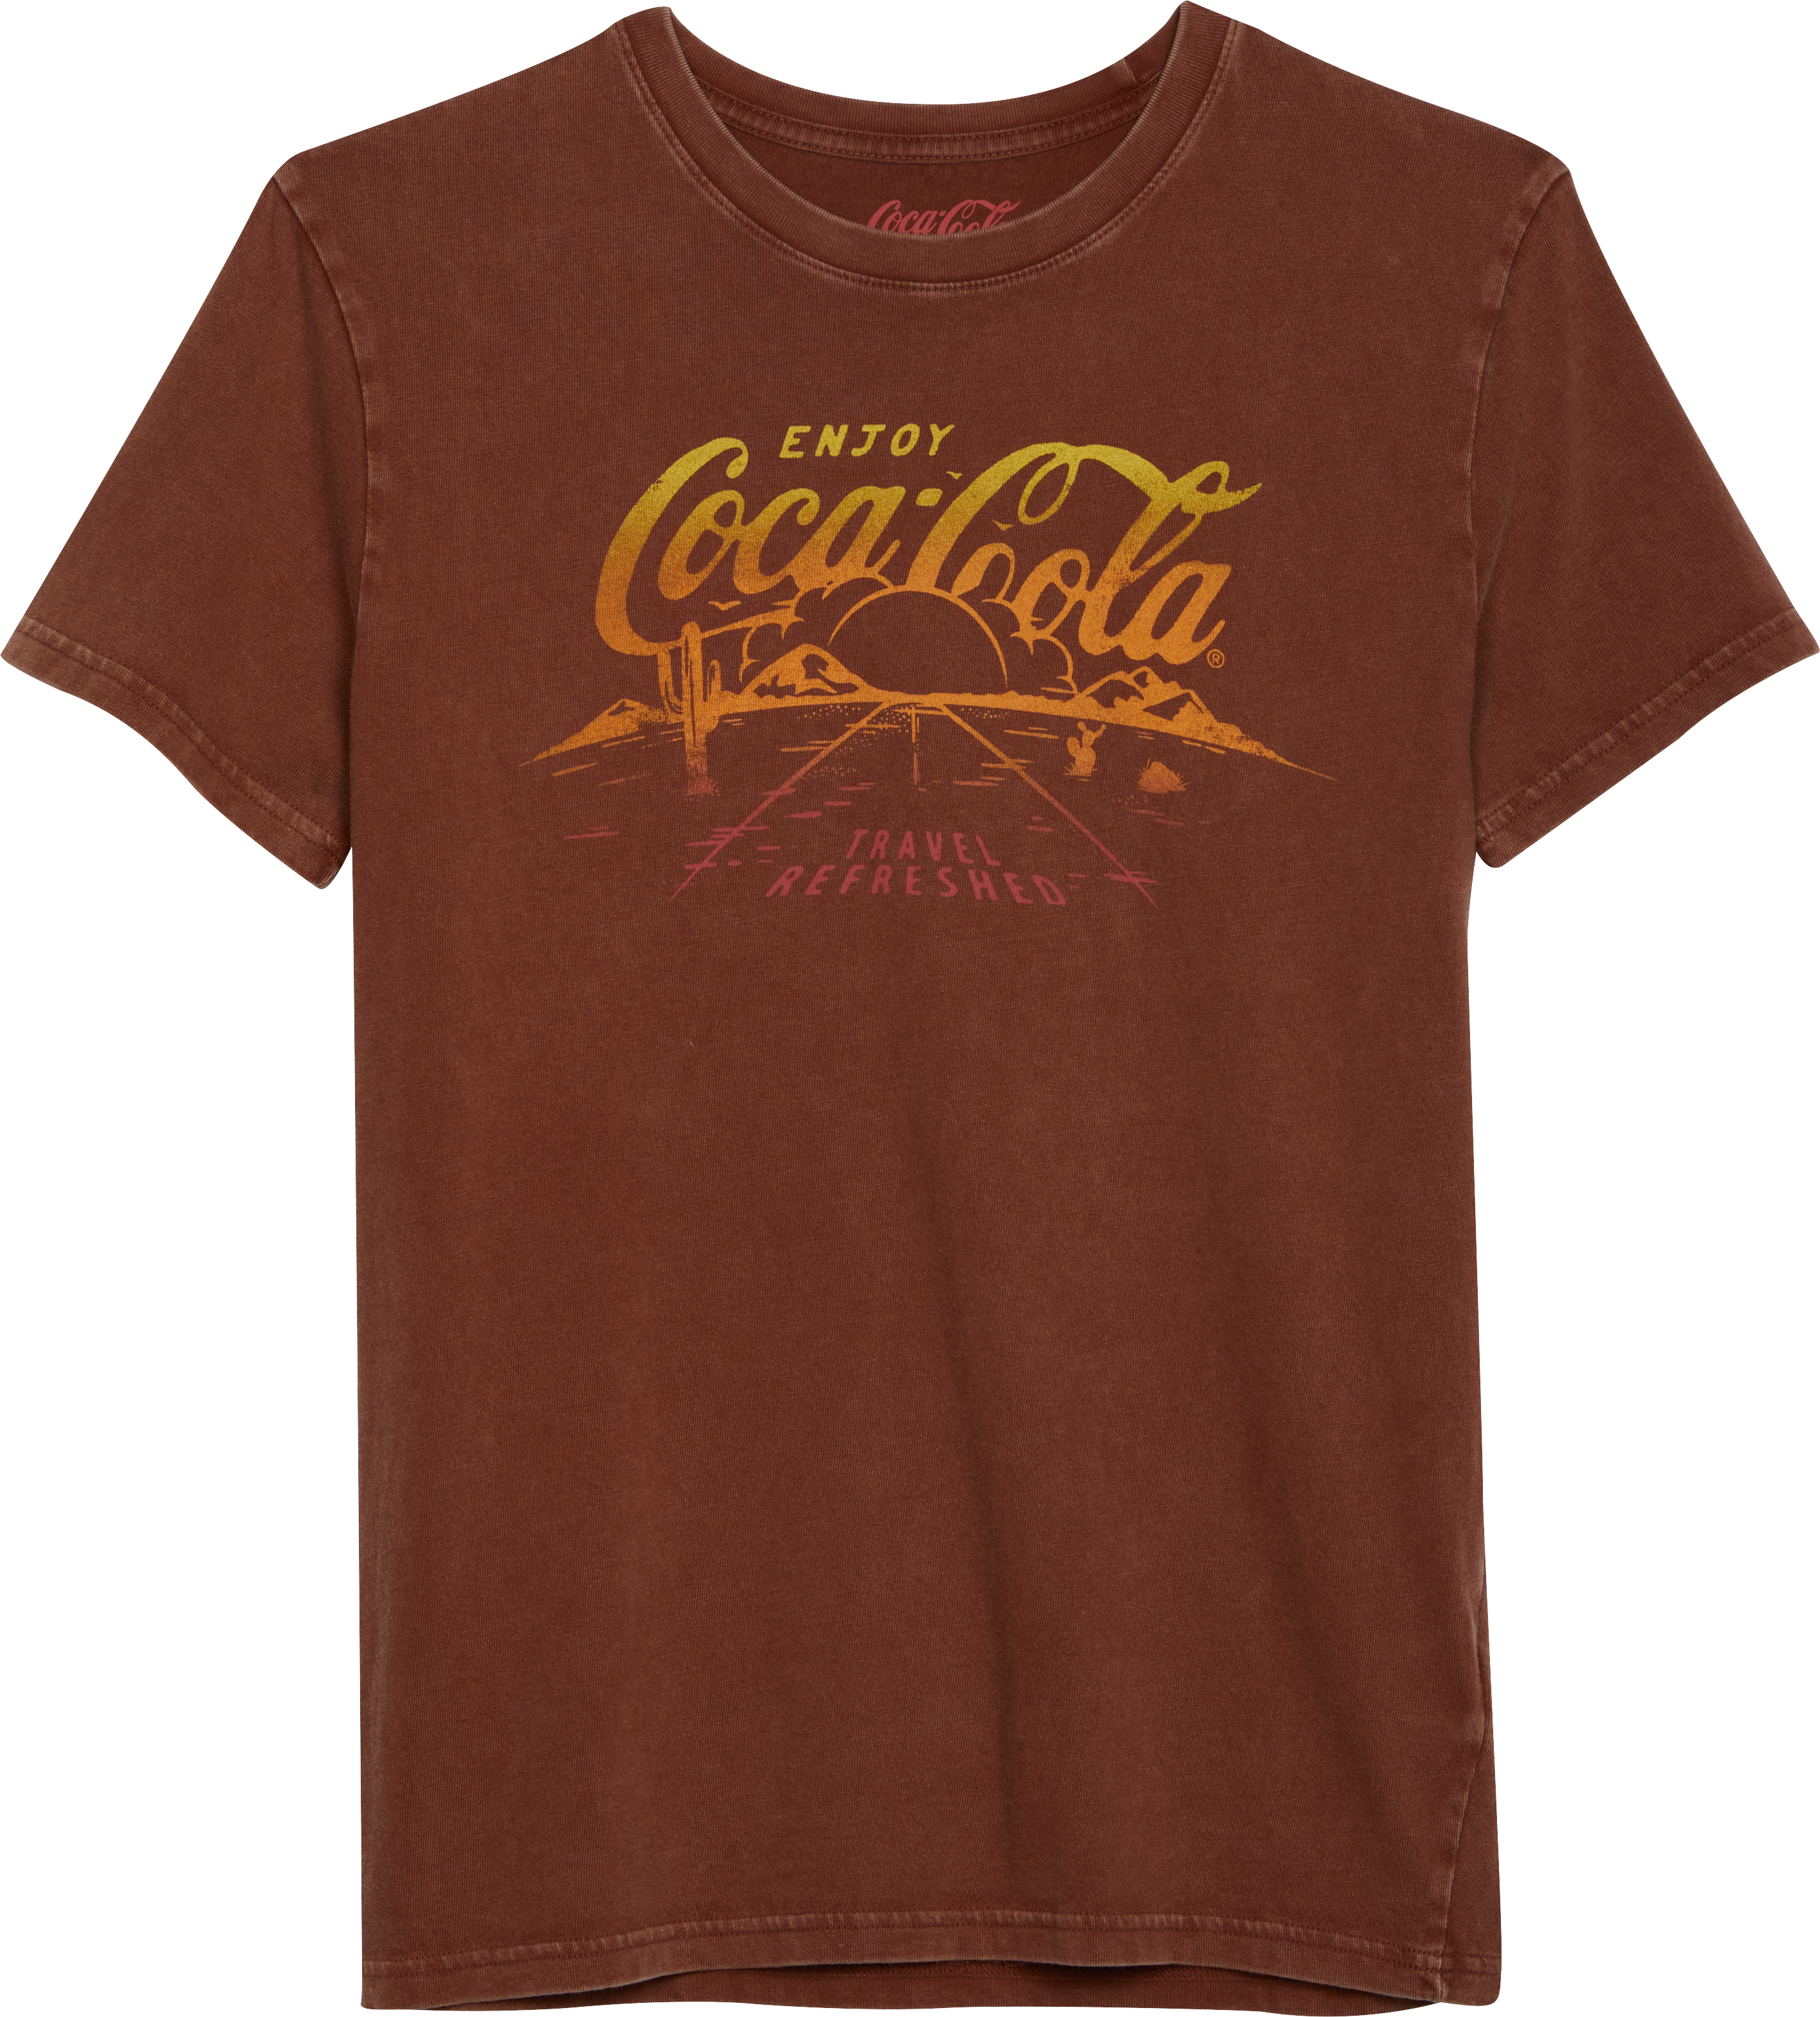 Lucky Brand Short-Sleeve Buffalo Stars Graphic T-Shirt